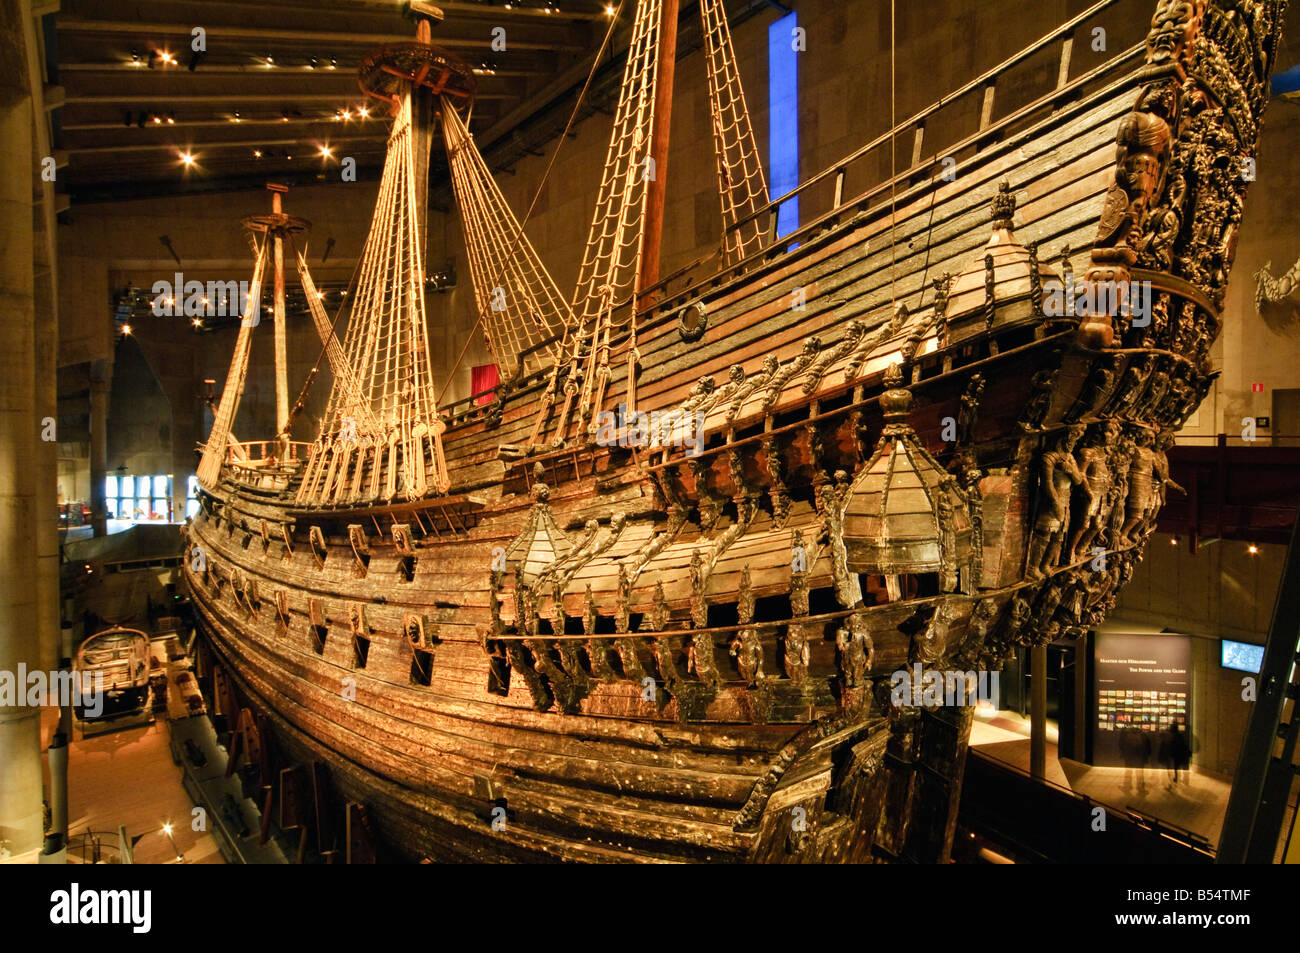 17th century warship Vasa on show at Vasamuseet Vasa museum in Stockholm Sweden Stock Photo